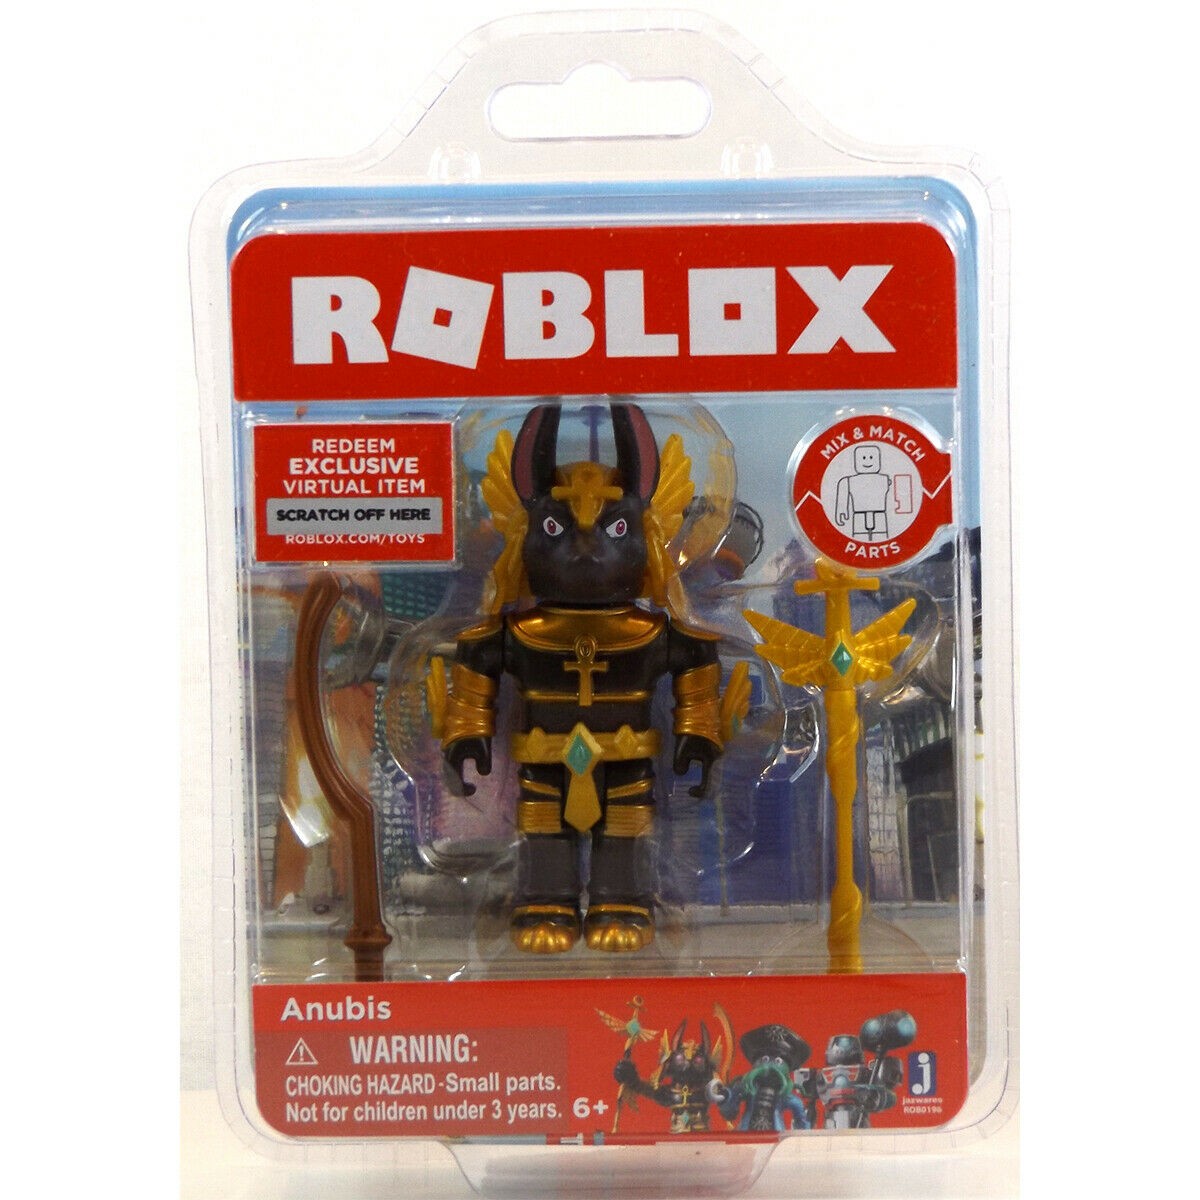 Roblox Anubis Argosy Toys - collectors guide roblox toys roblox toys w 2019